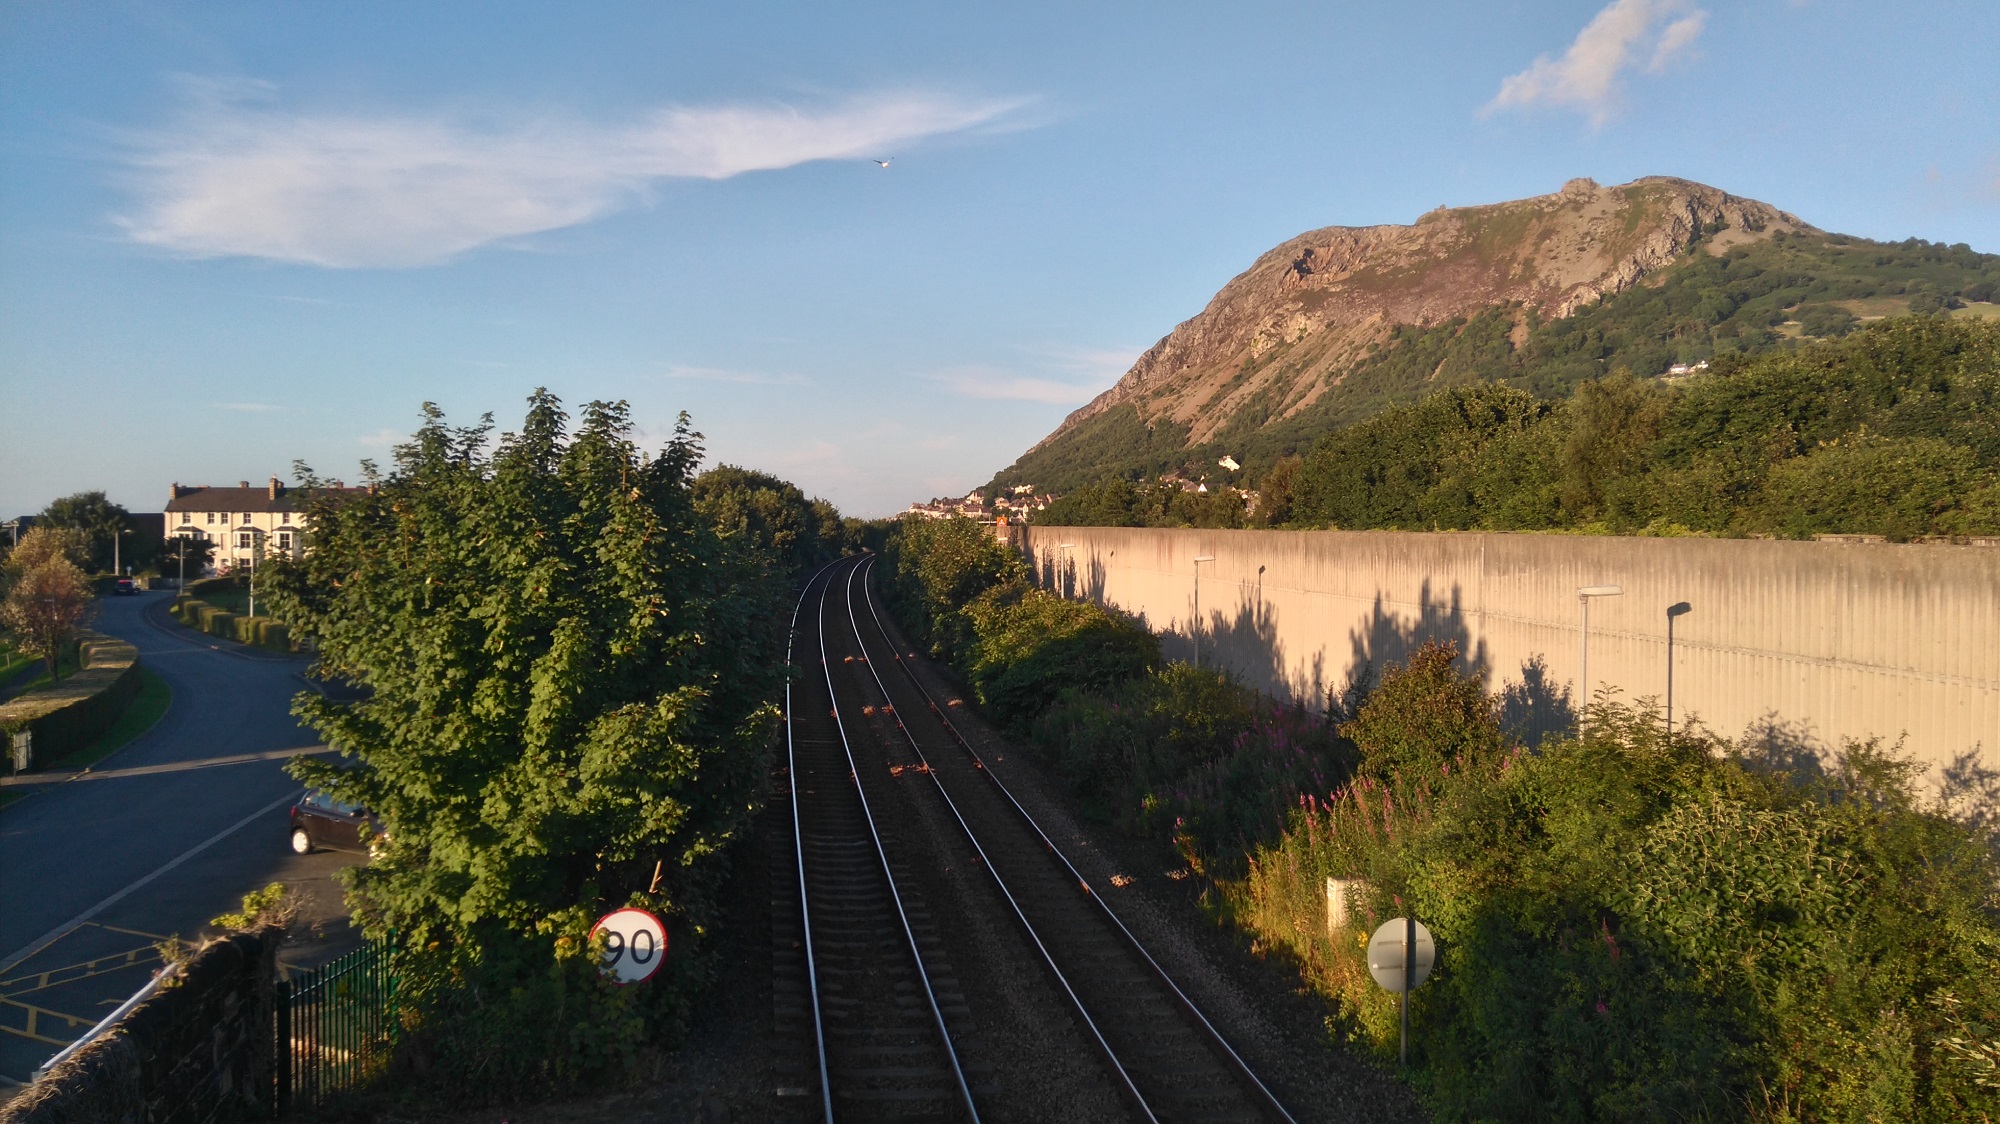 Railway tracks sunny summer mountain